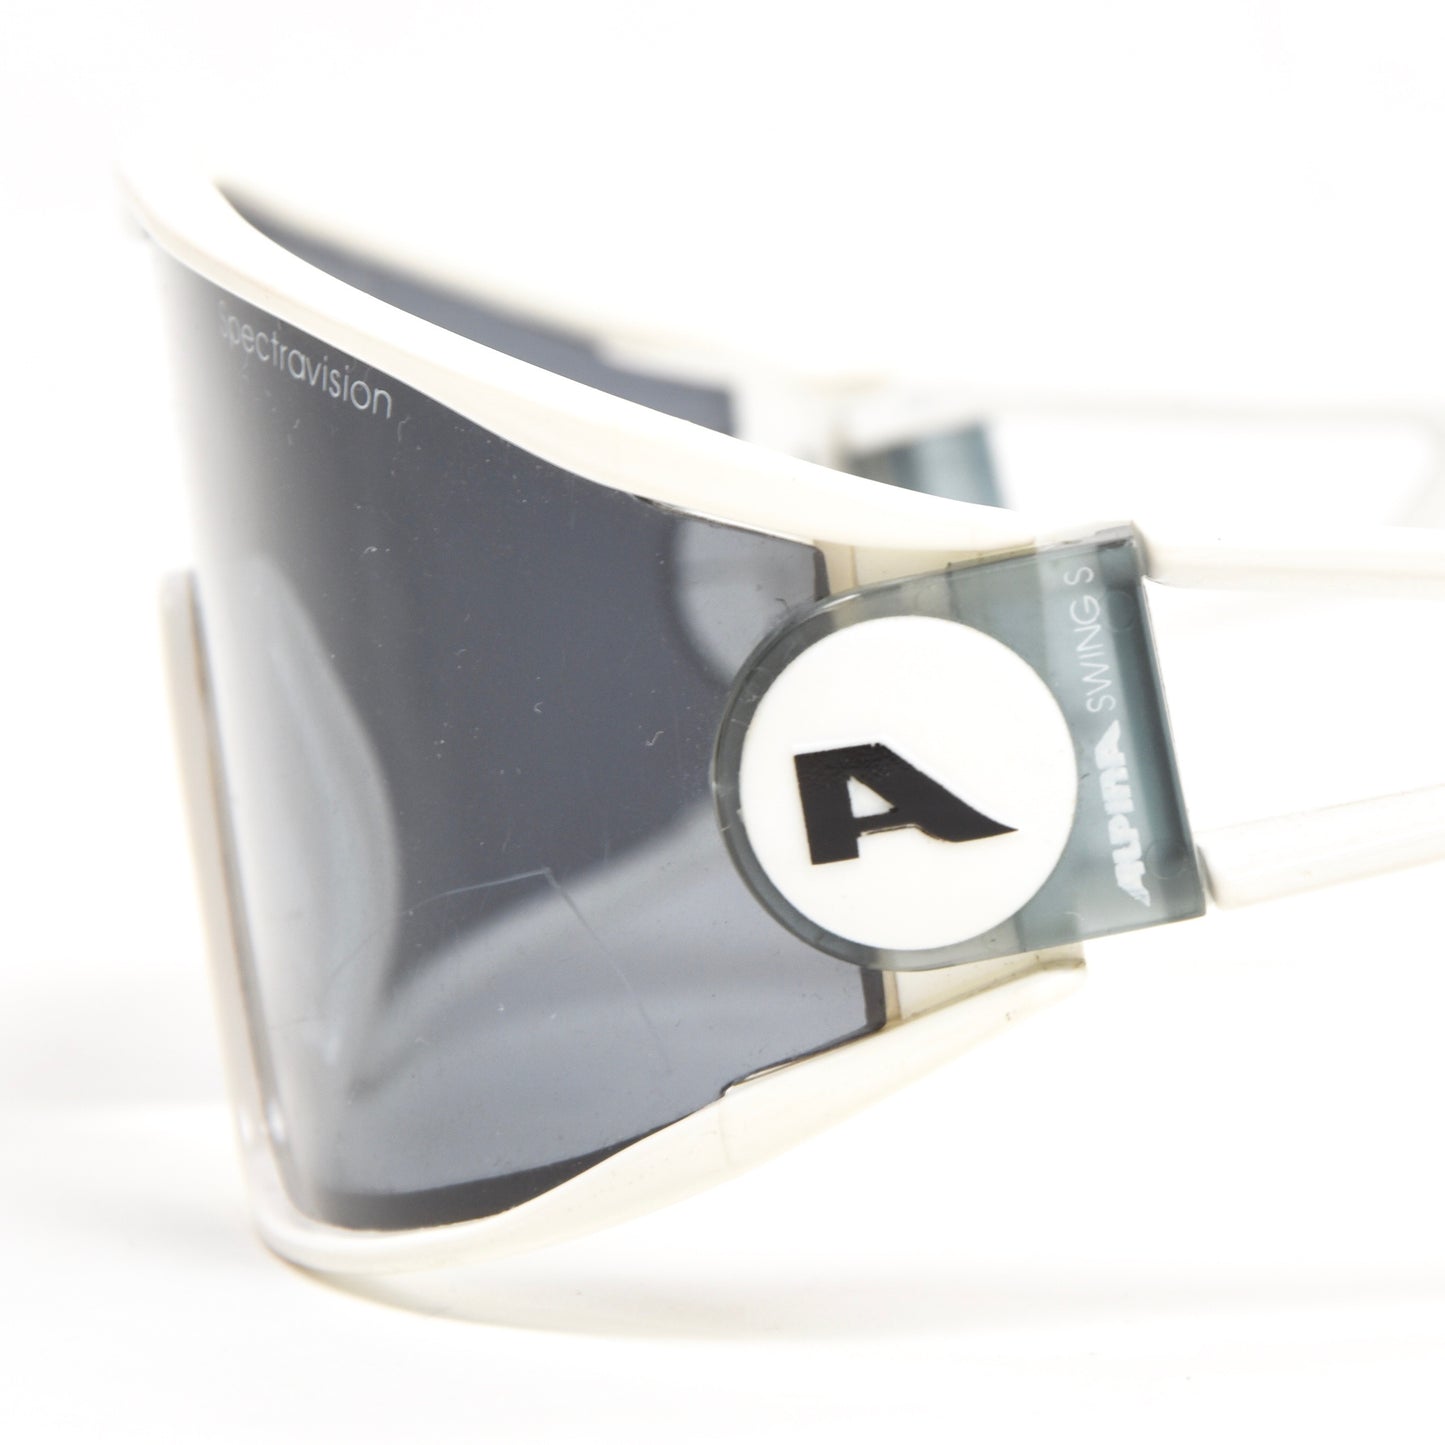 Vintage Alpina Swing Shield Sunglasses - White